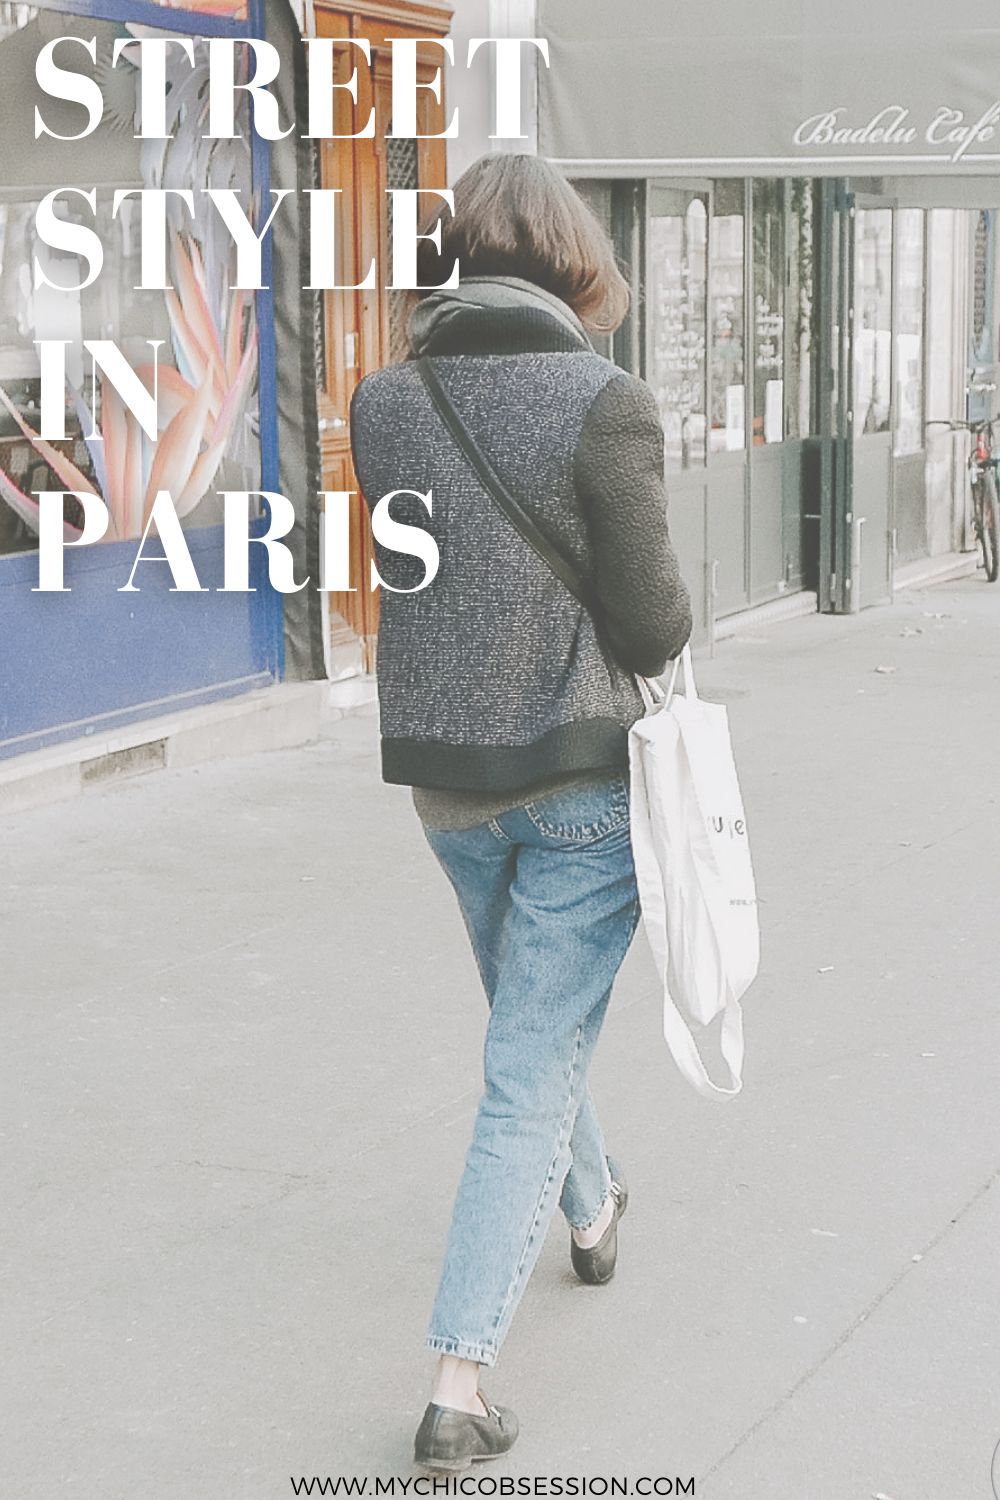 Street style in Paris